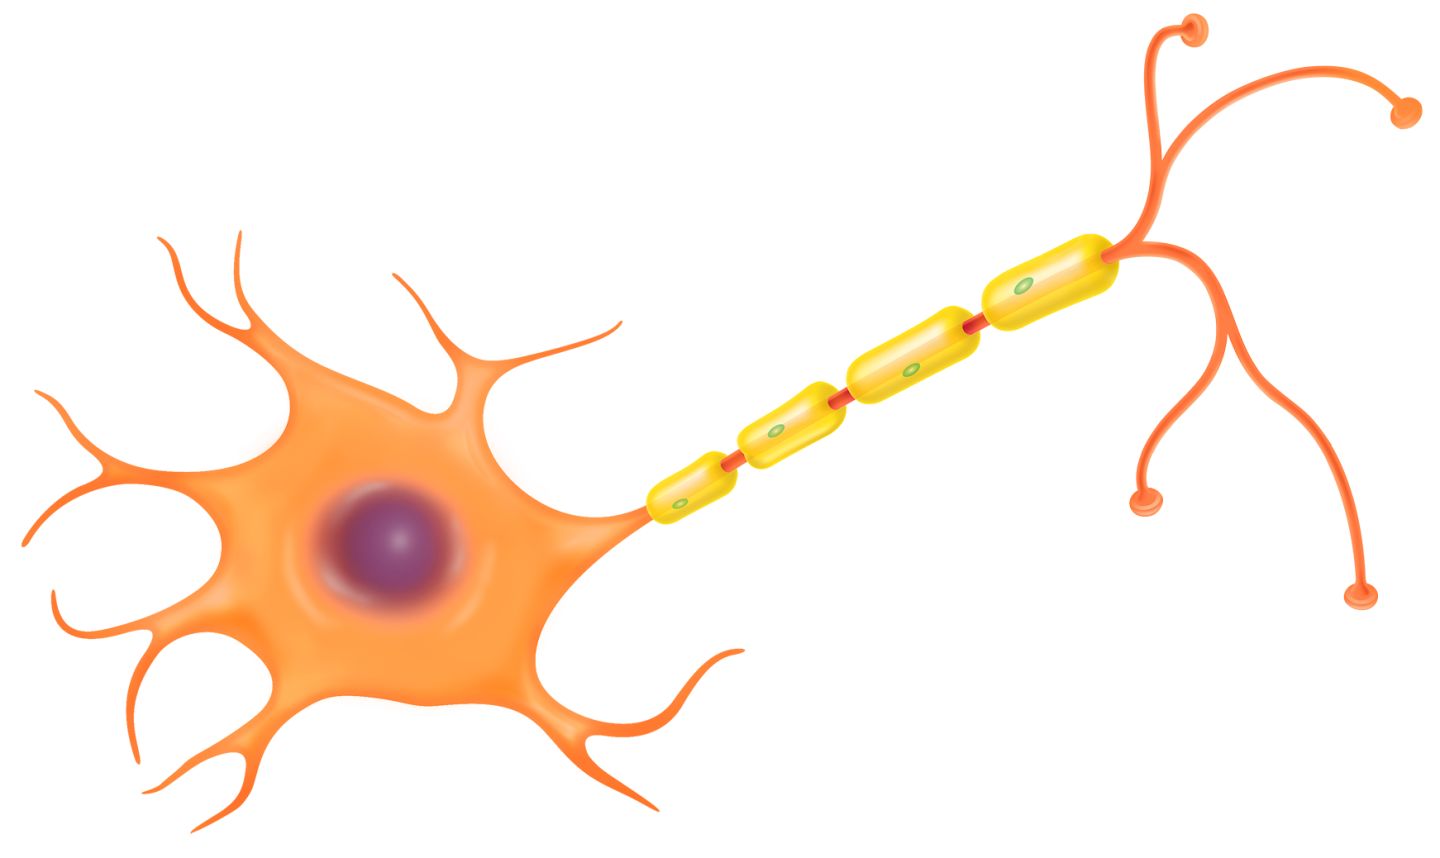 unlabeled neuron diagram